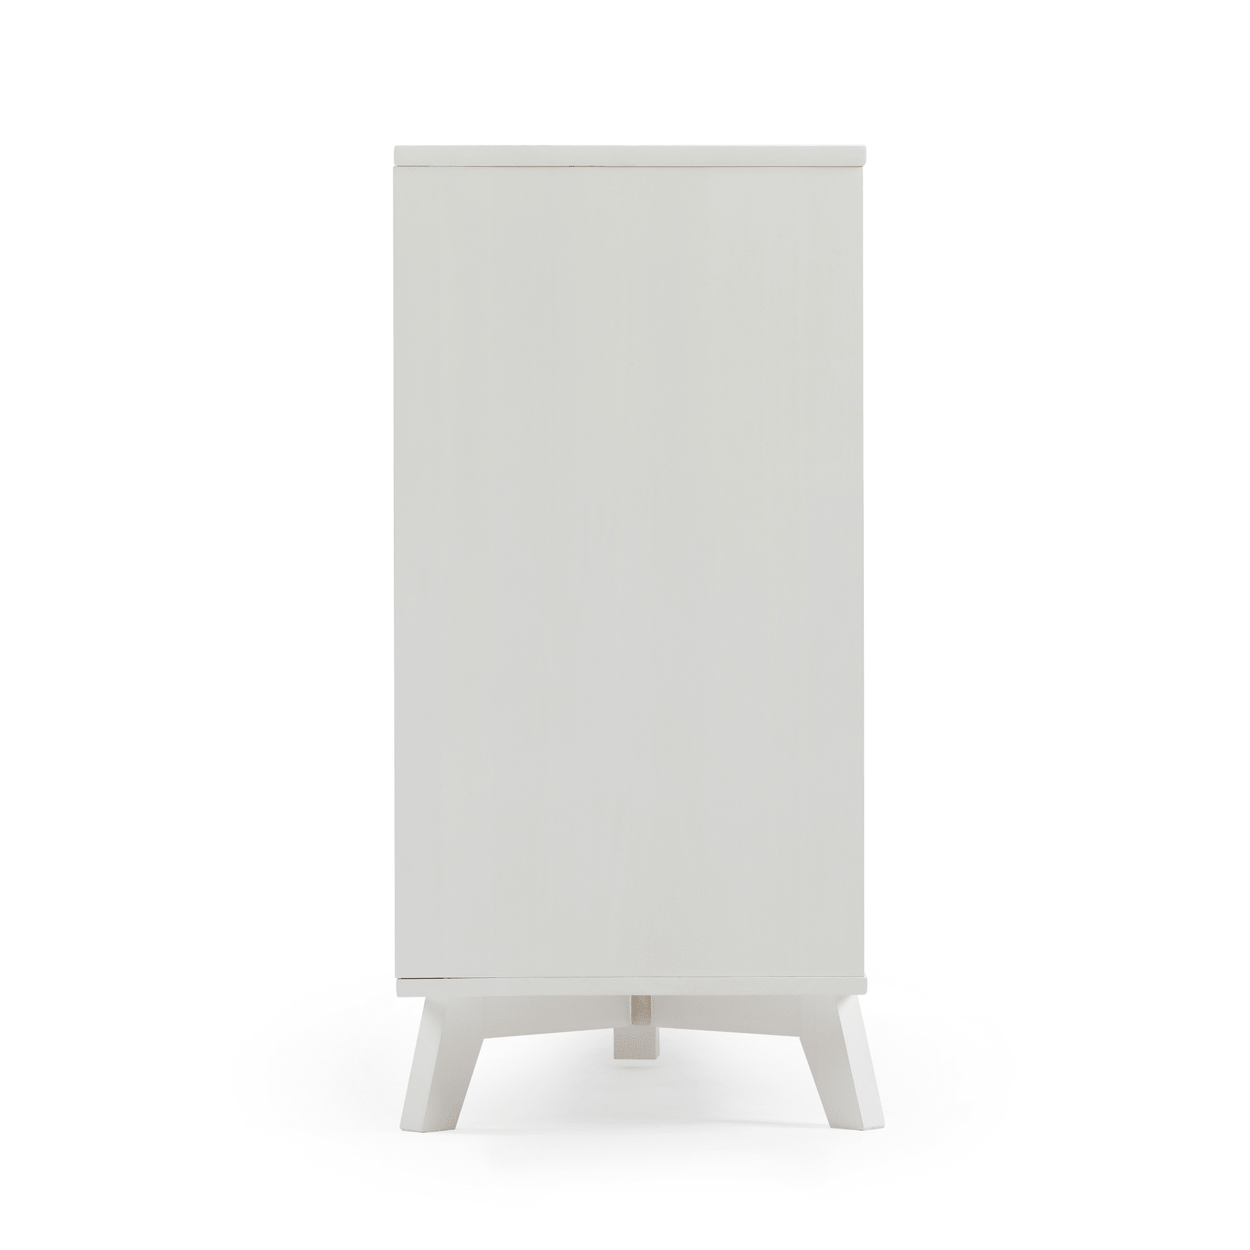 2100213000-202 : Furniture Scandinavian 3 Drawer Dresser, White/Blonde